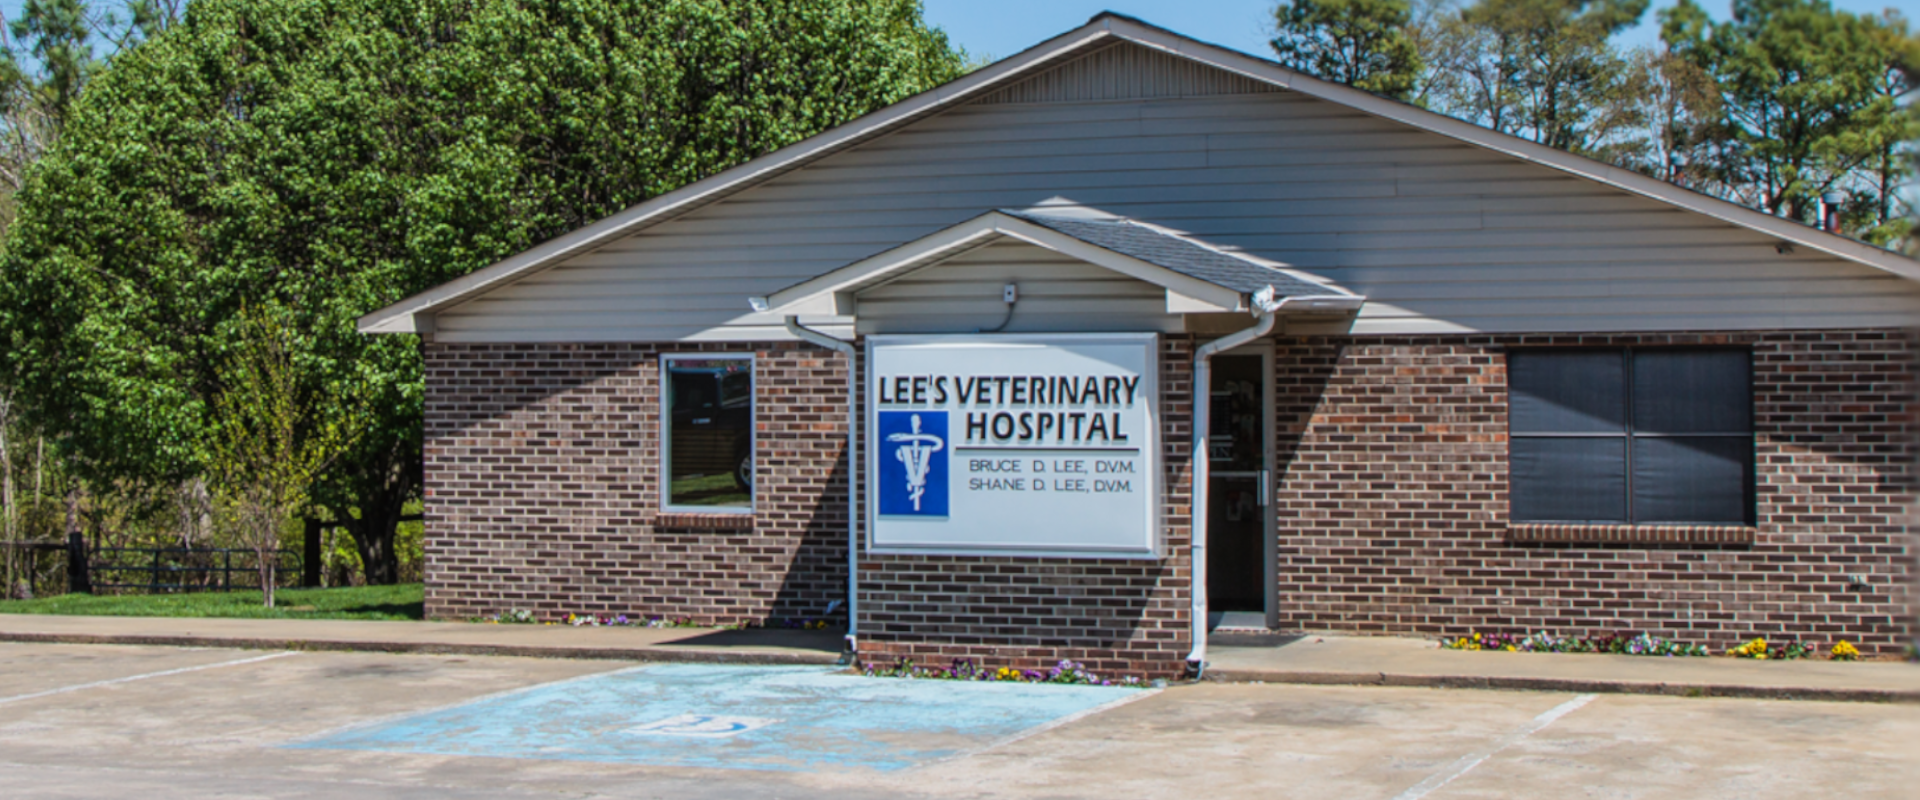 Lee's Veterinary Hospital | Cullman, AL 35058